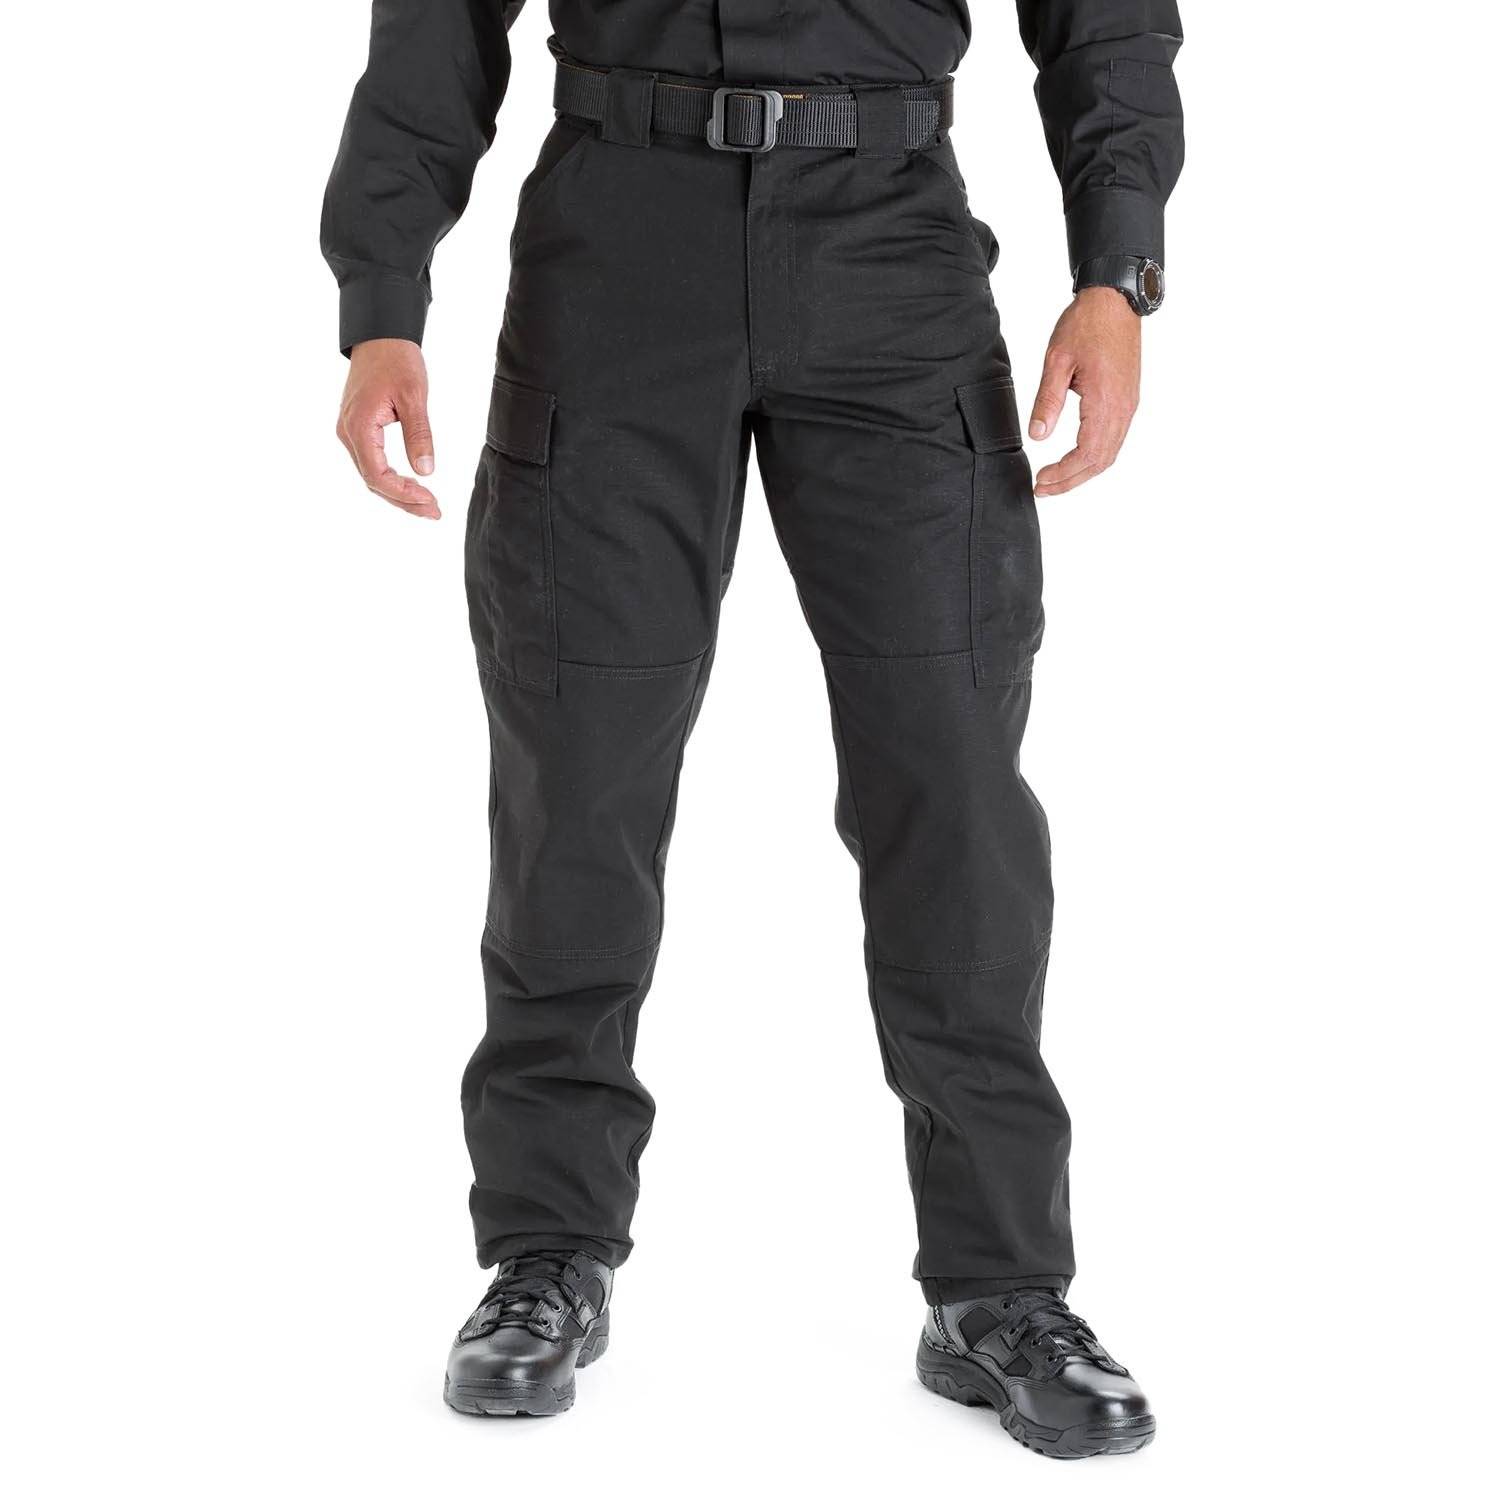 5.11 ripstop tdu trousers black